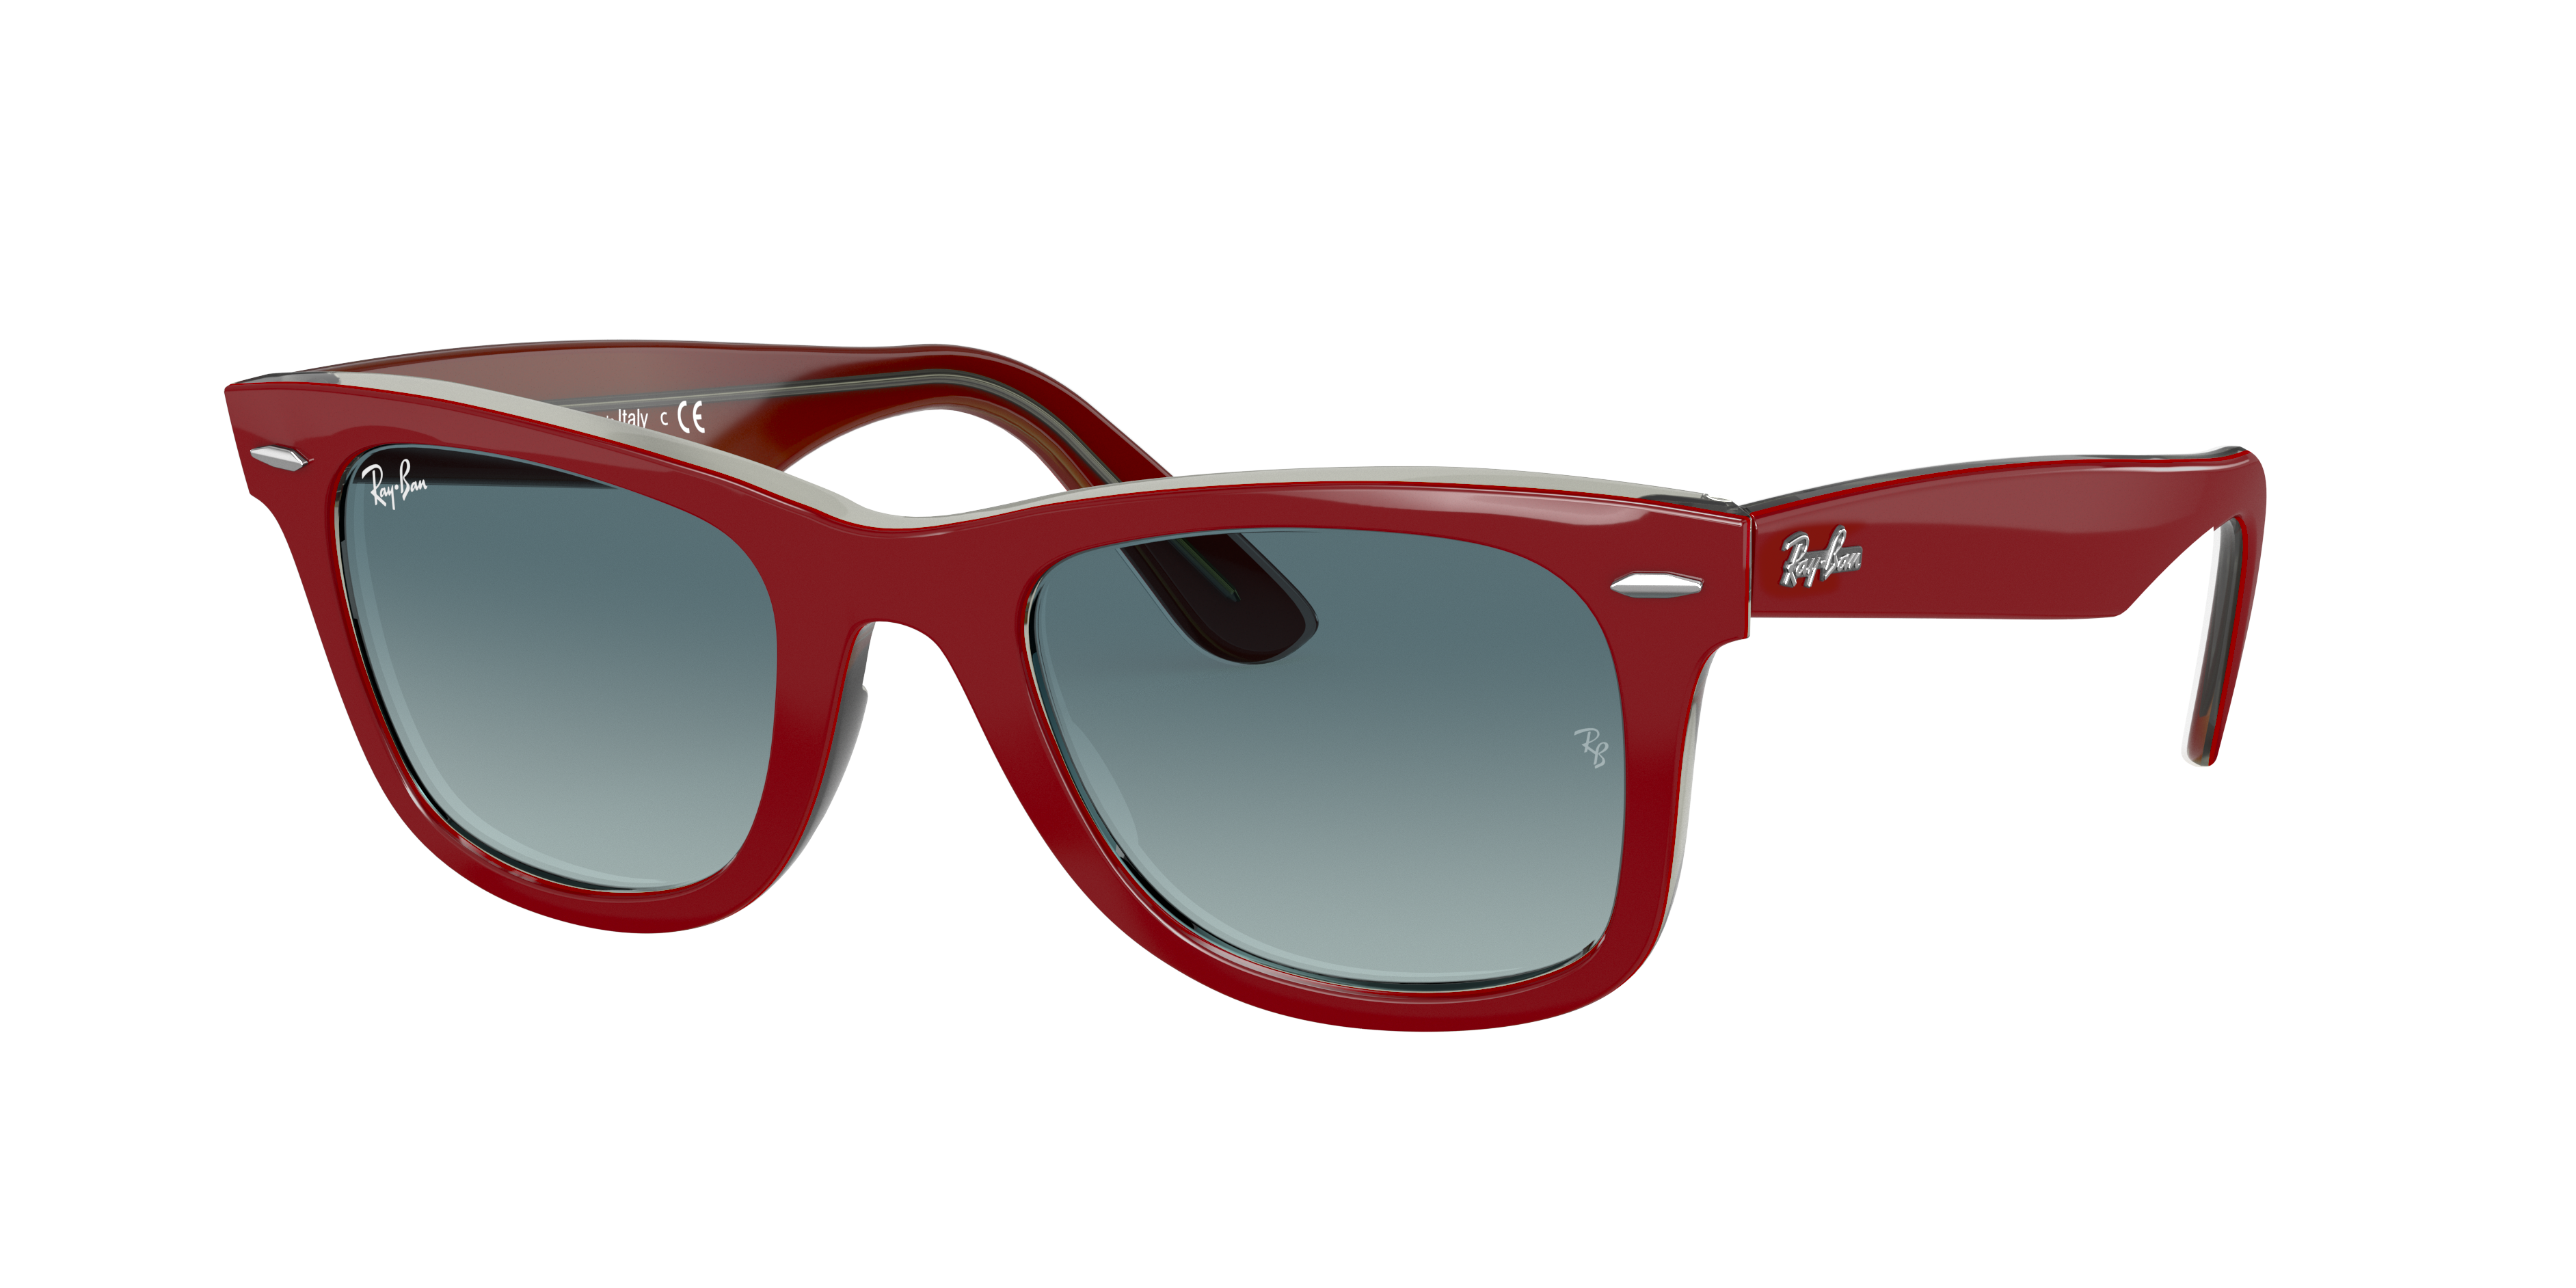 Original Wayfarer Bicolor Sunglasses in Red and Blue | Ray-Ban®